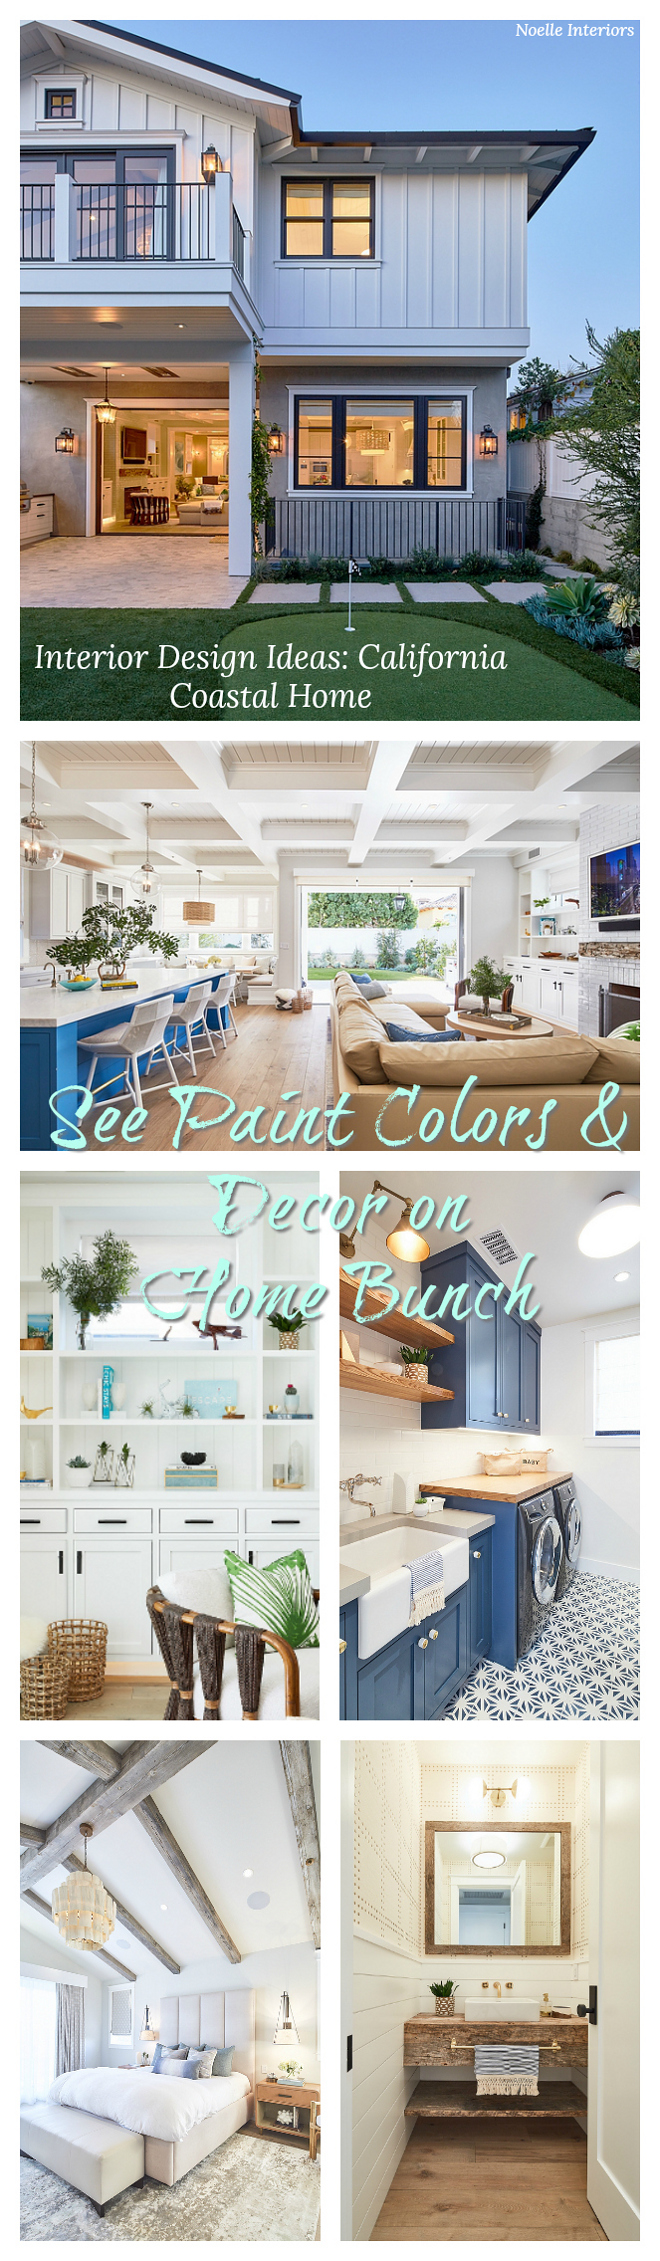 The Best Benjamin Moore Paint Colors Home Bunch Interior Design Ideas